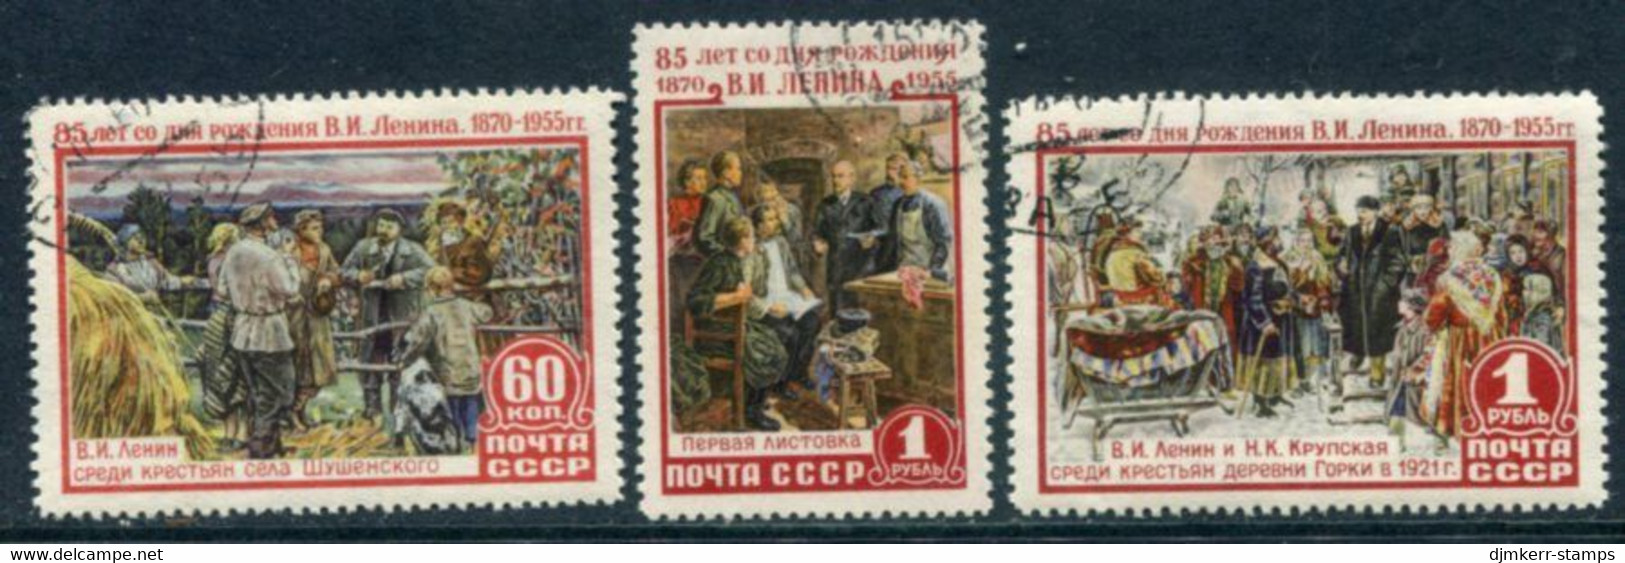 SOVIET UNION 1955 Lenin Birth Anniversary Used.  Michel 1756-58 - Gebraucht